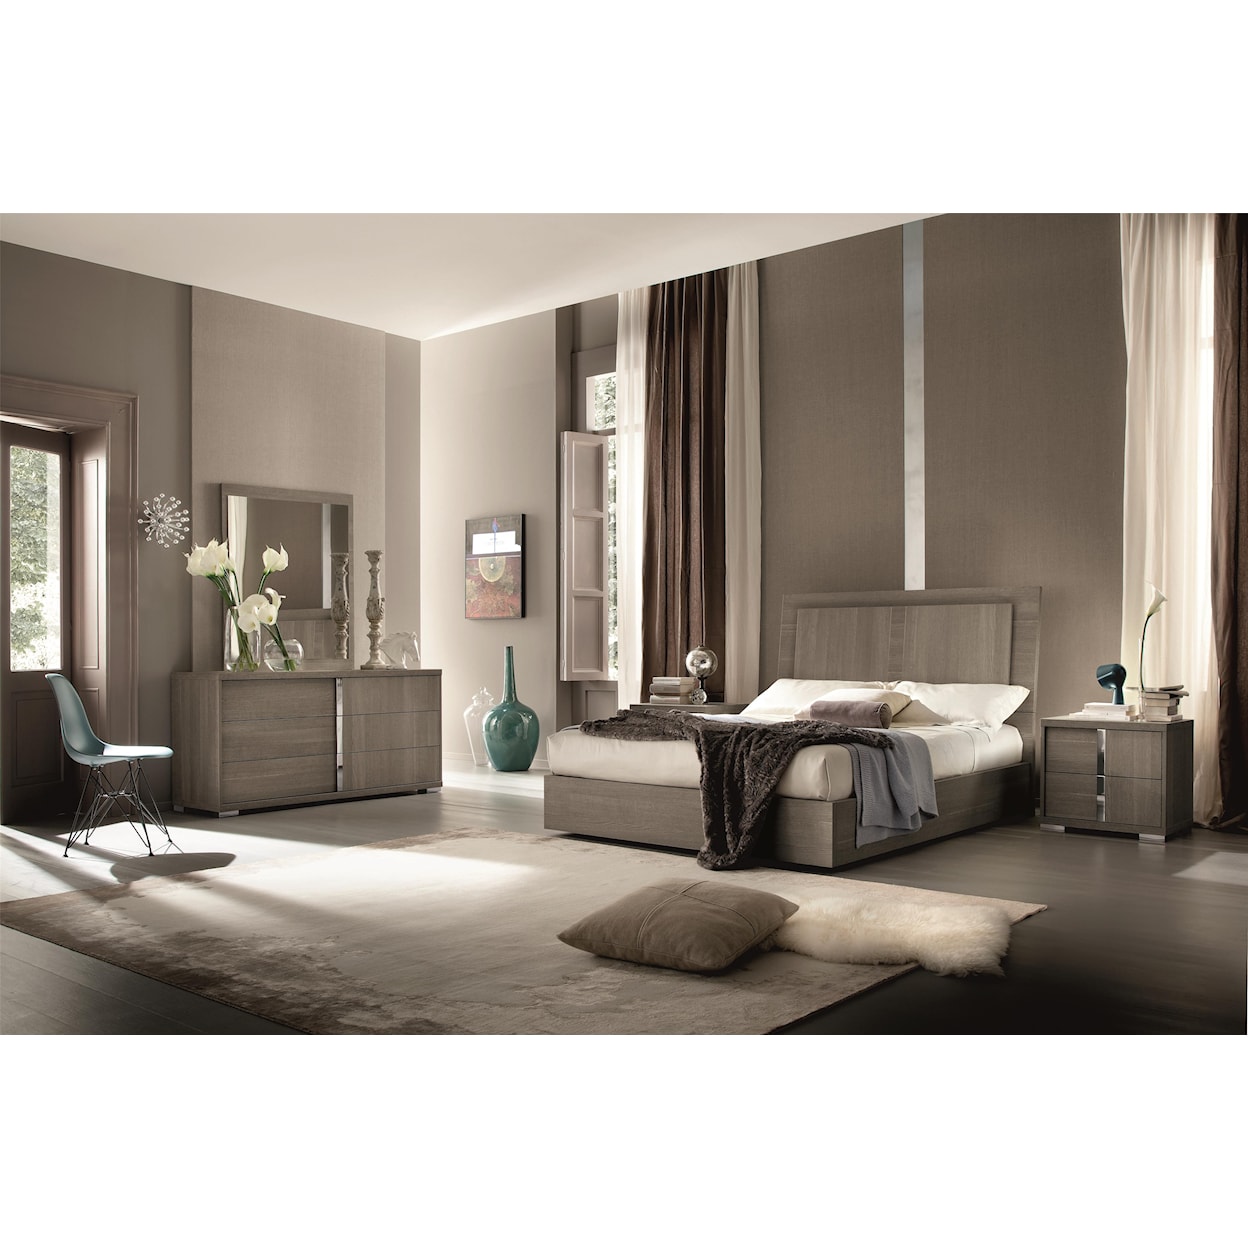 Alf Italia Tivoli King Bedroom Group